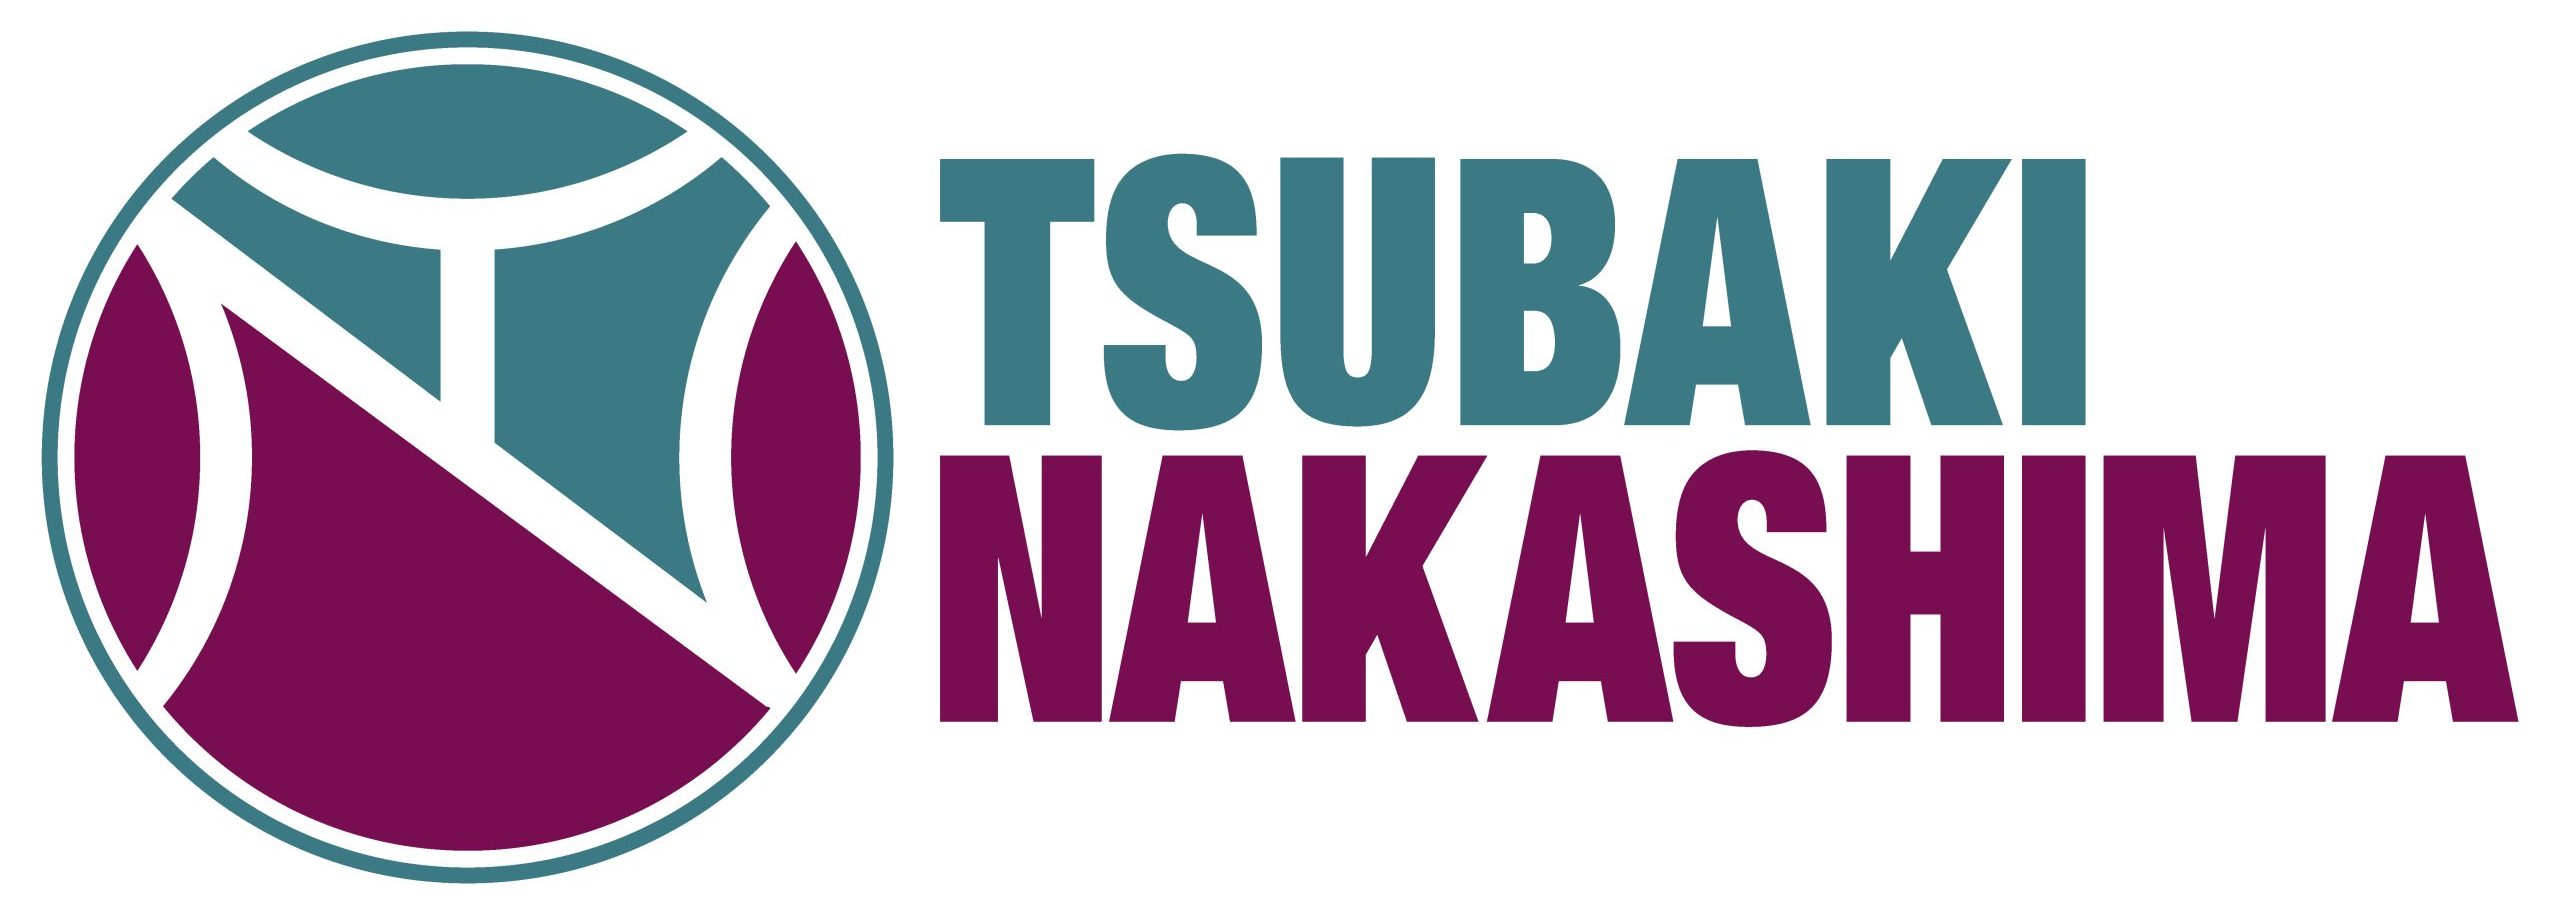 TSUBAKI NAKASHIMA CO., LTD.